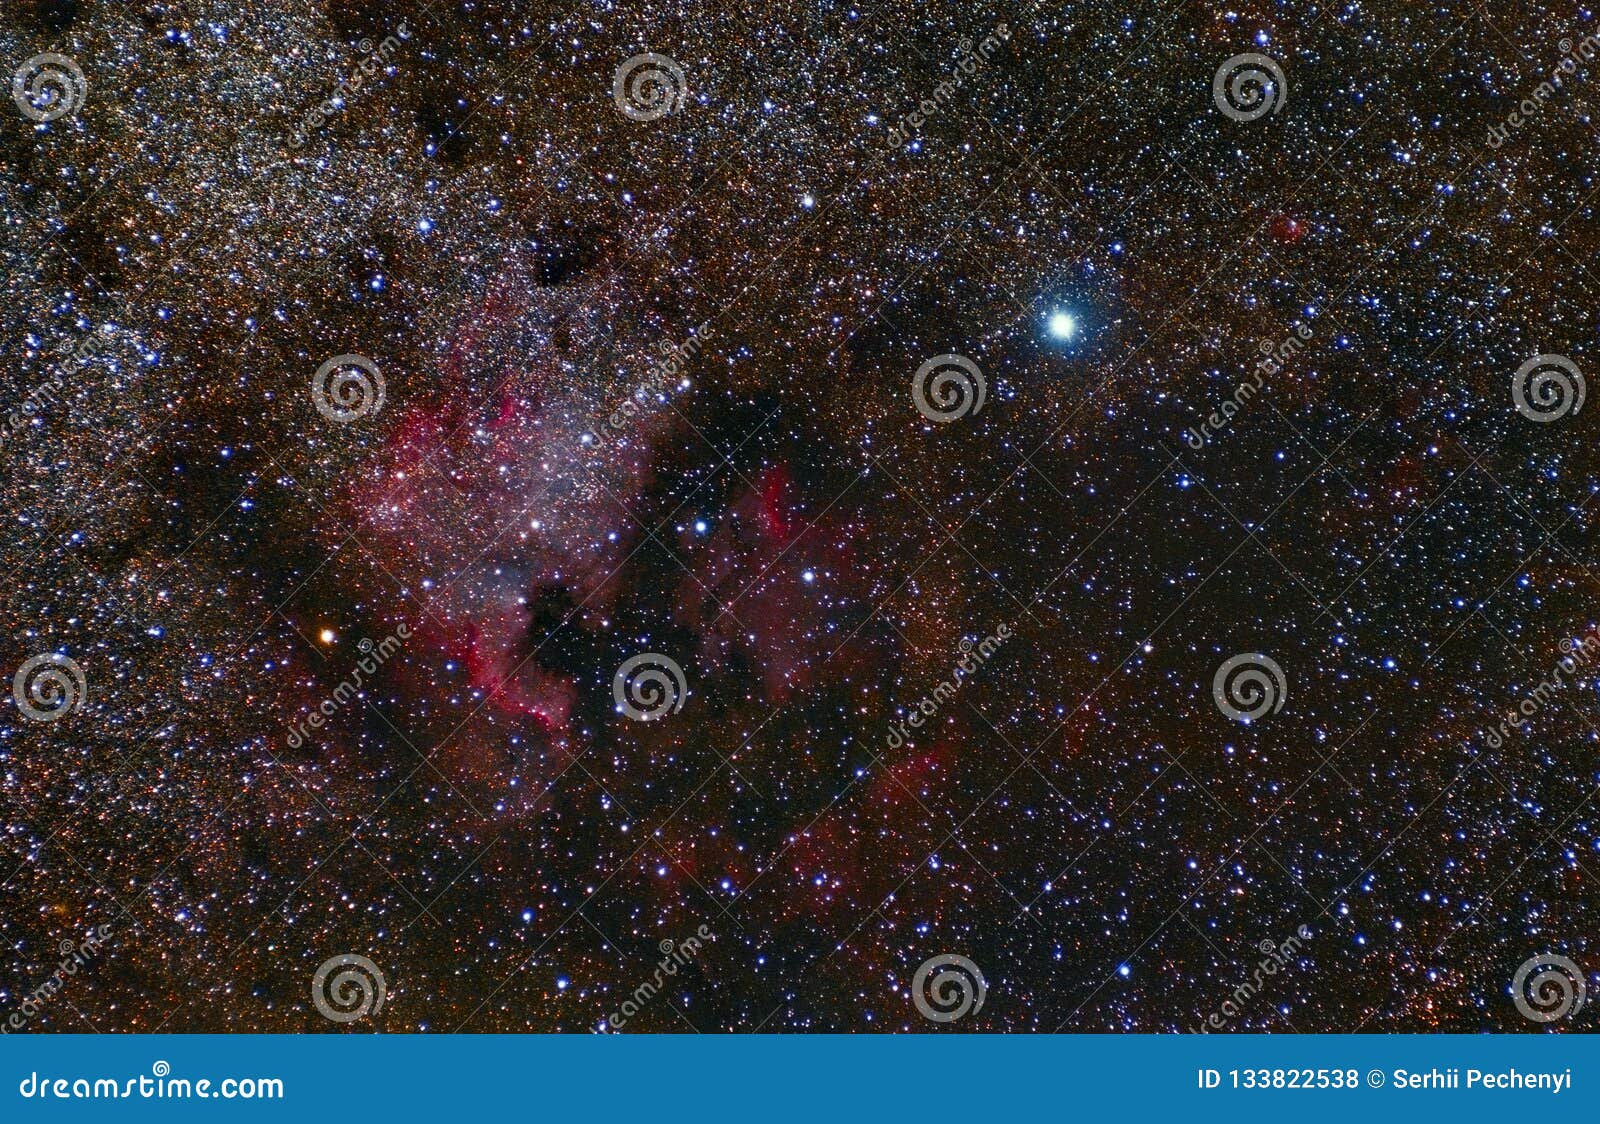 north america nebula. cygnus constellation. deneb. telescope astrophotography